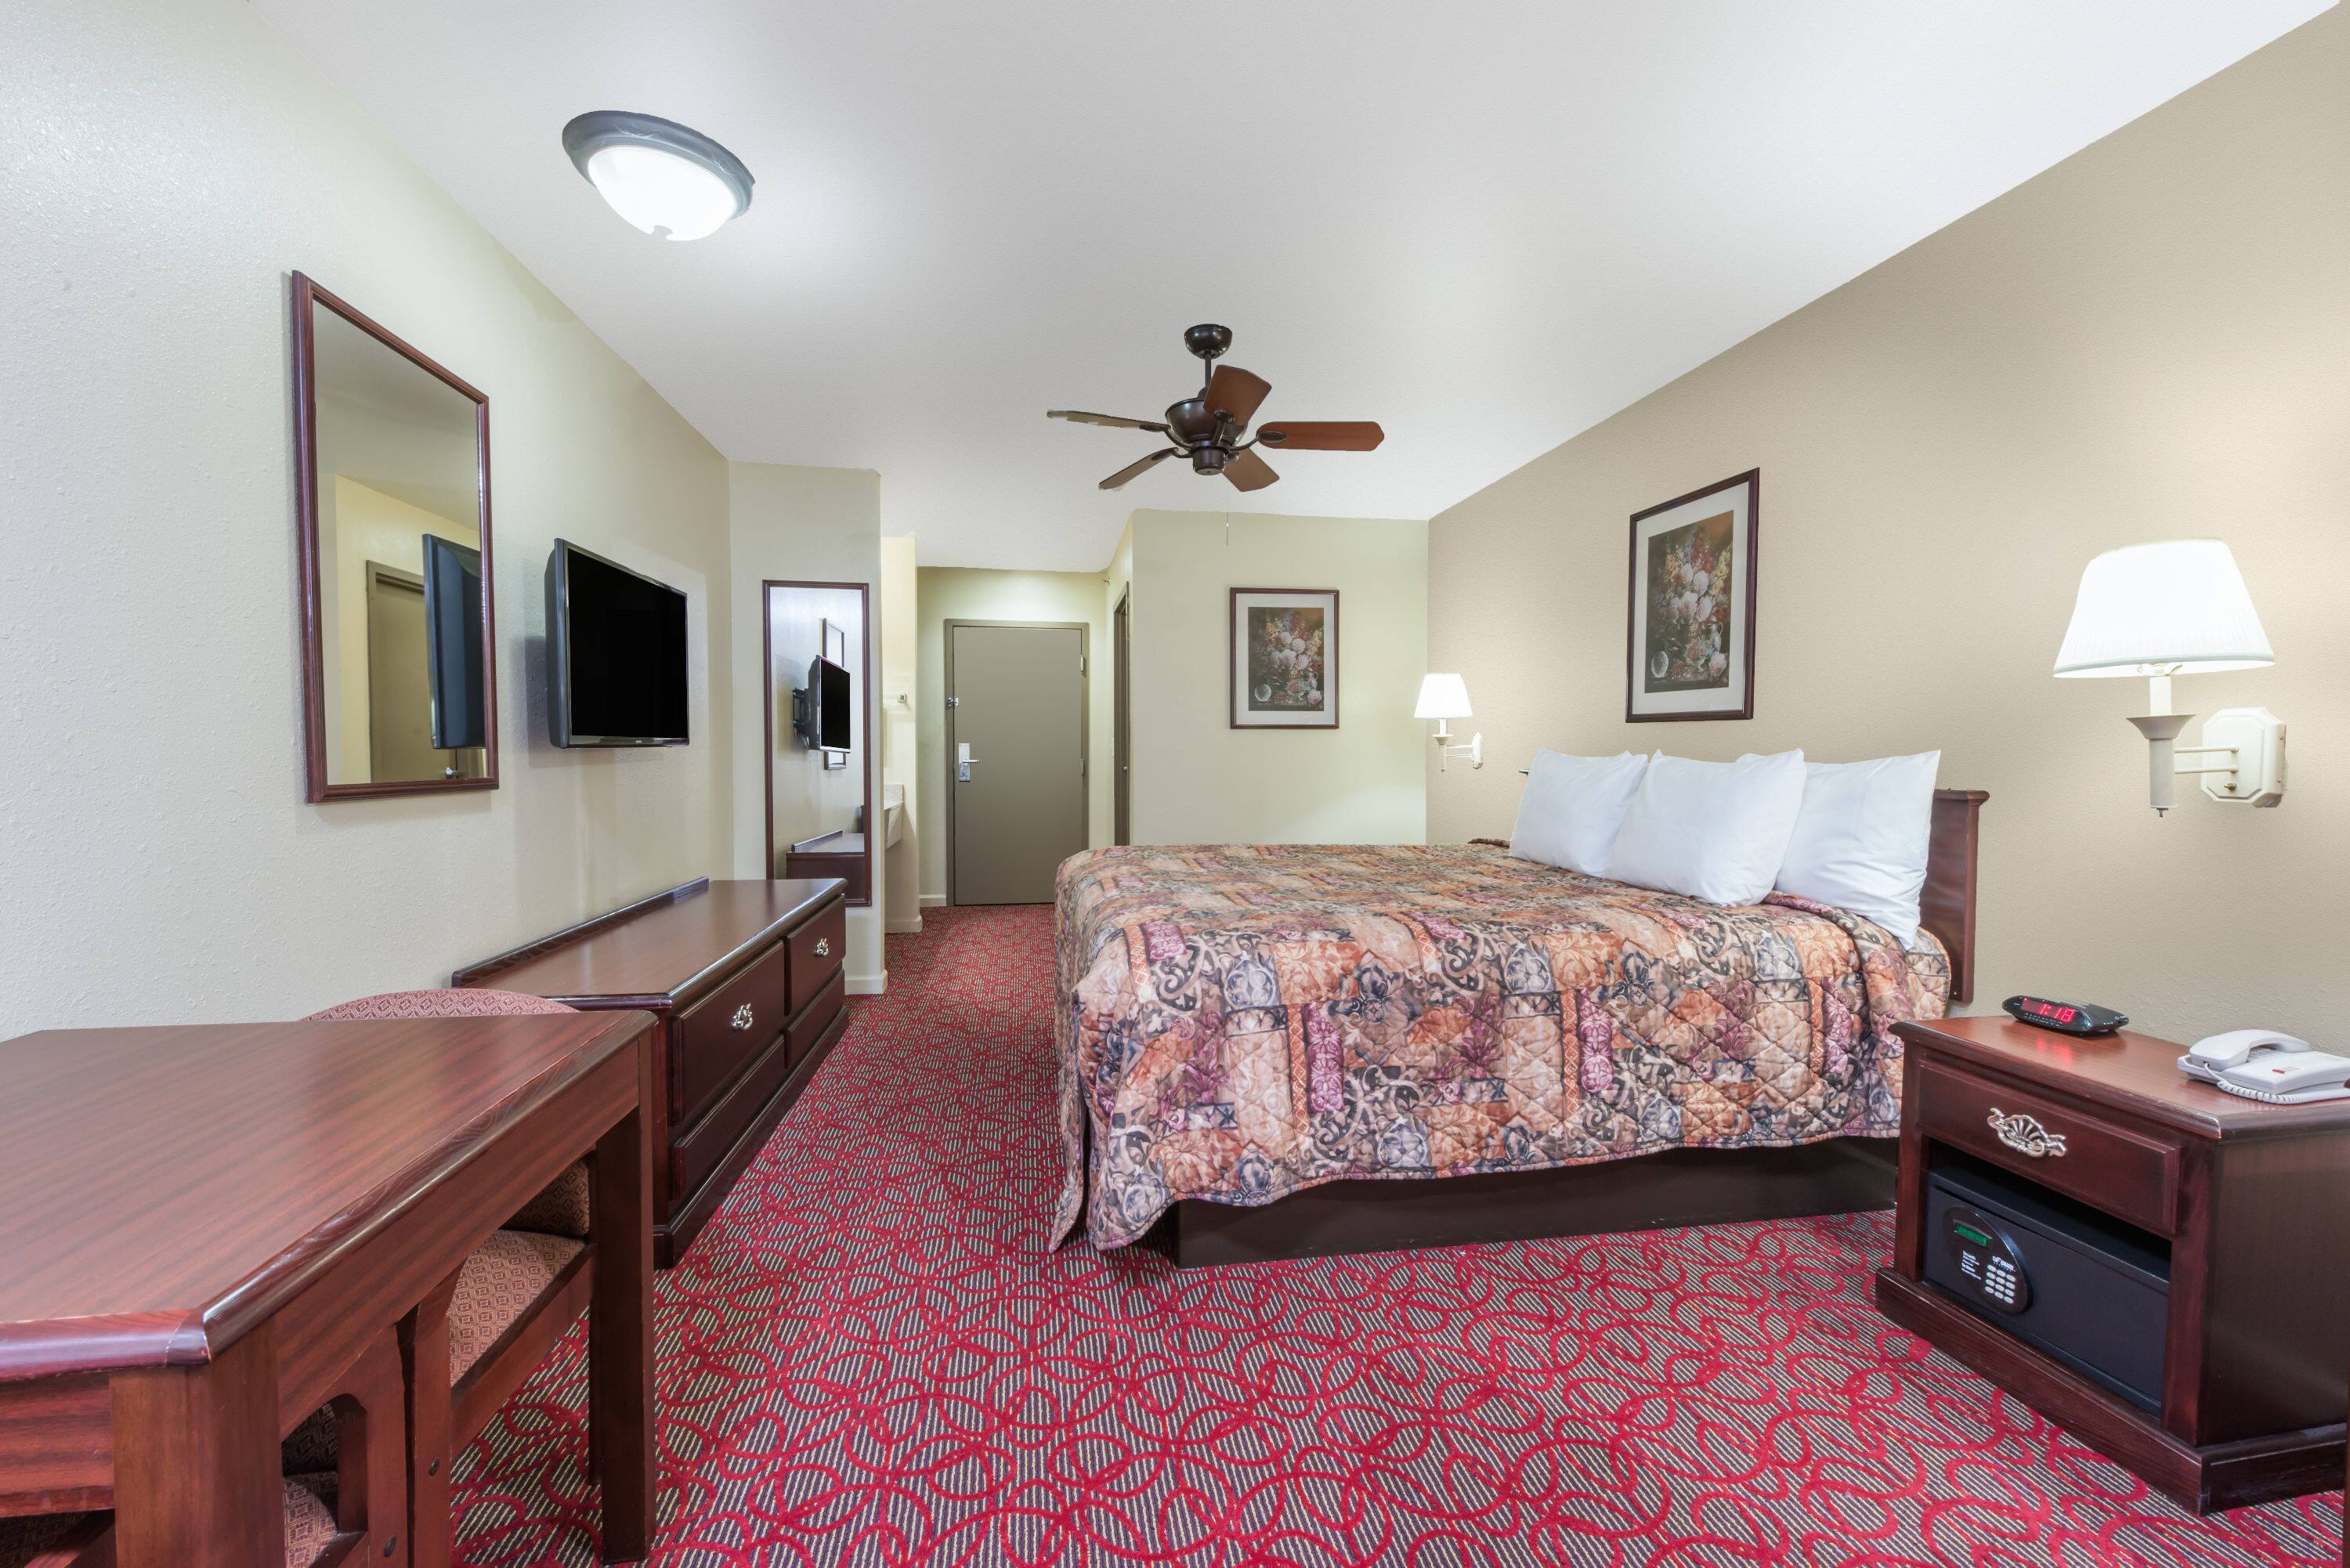 Discount [85% Off] Days Inn Lake Charles United States | Aria Hotel Reviews Las Vegas